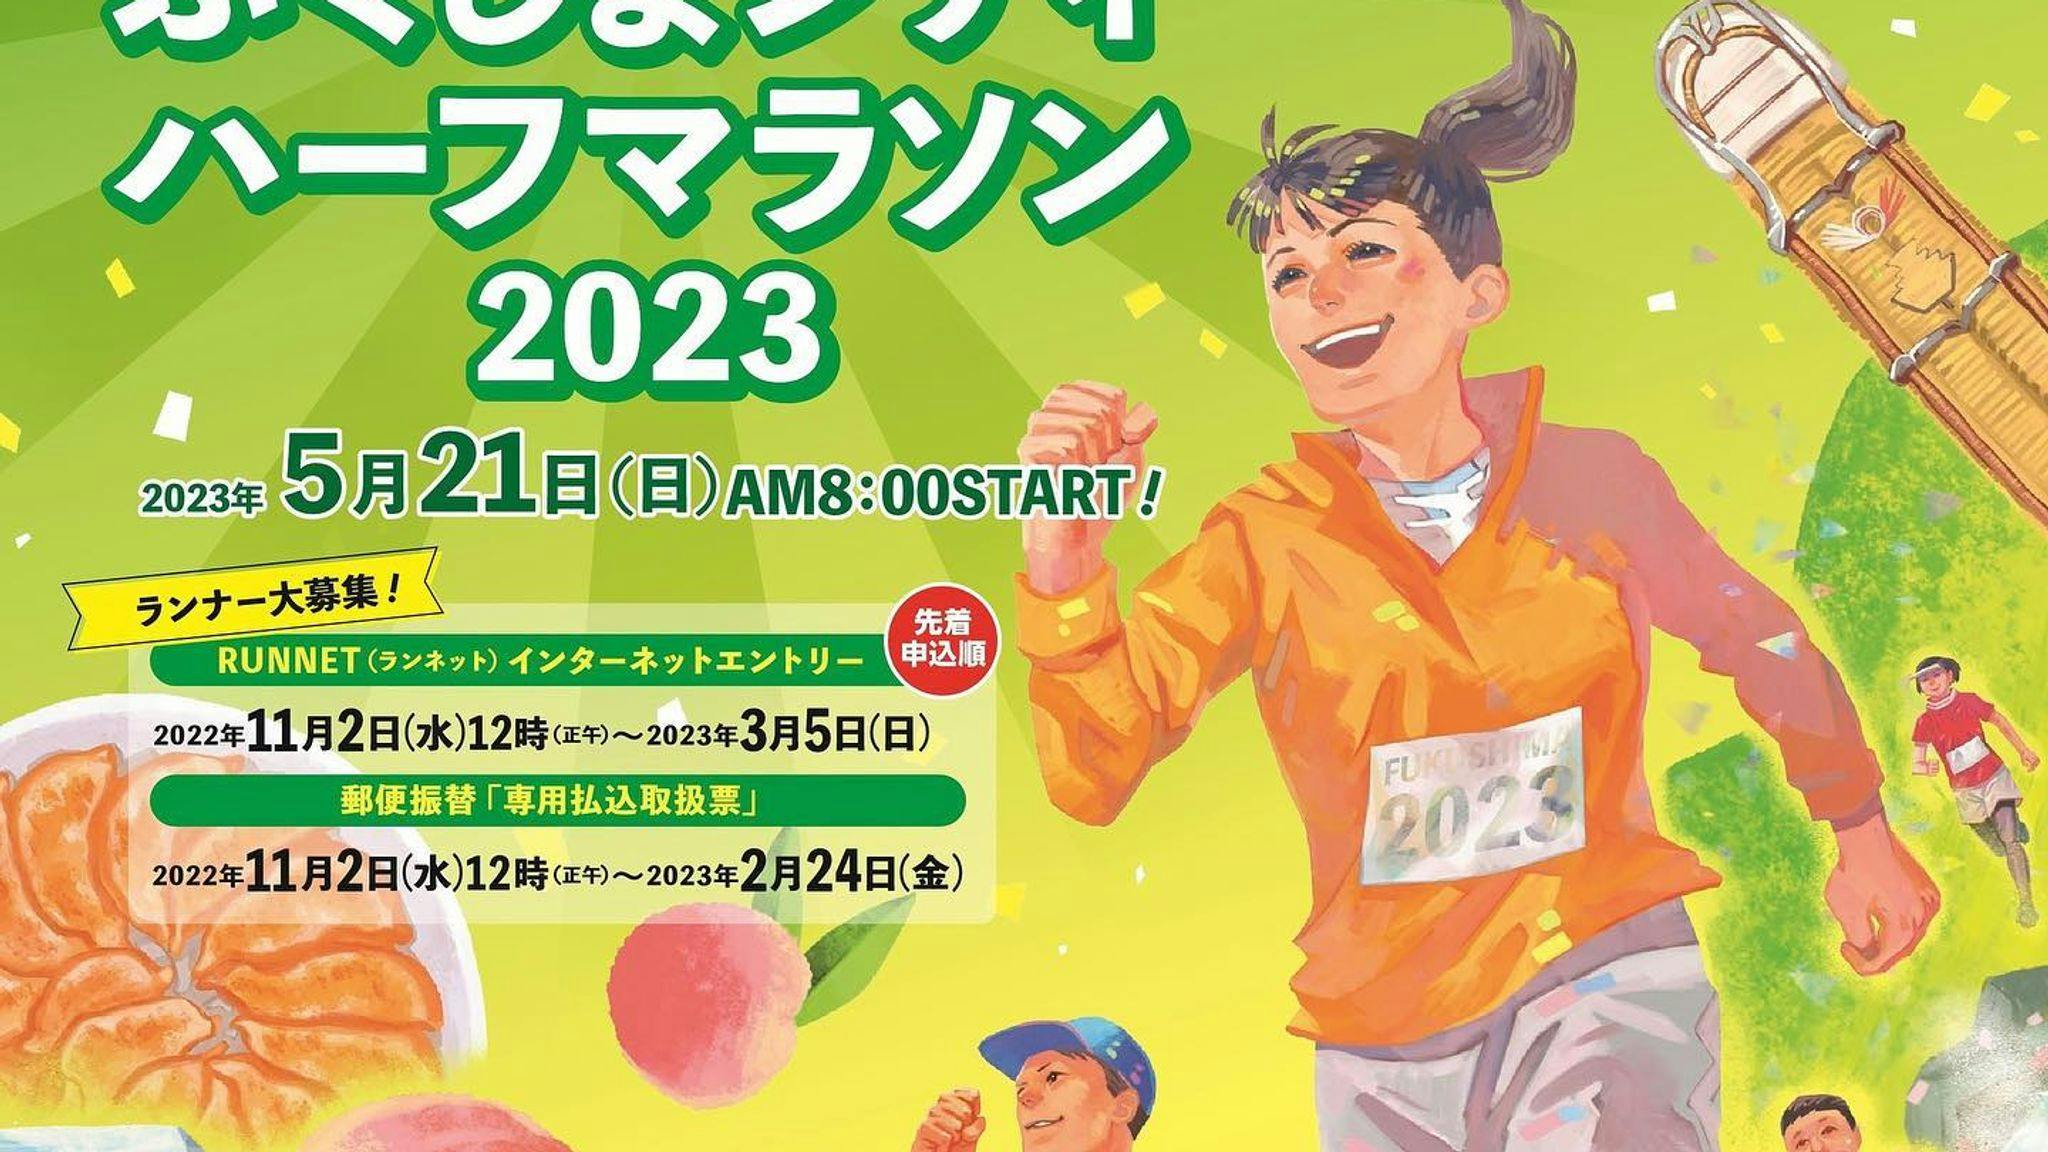 The Advertising Flyer of the Fukushima City Half Marathon in 2023 